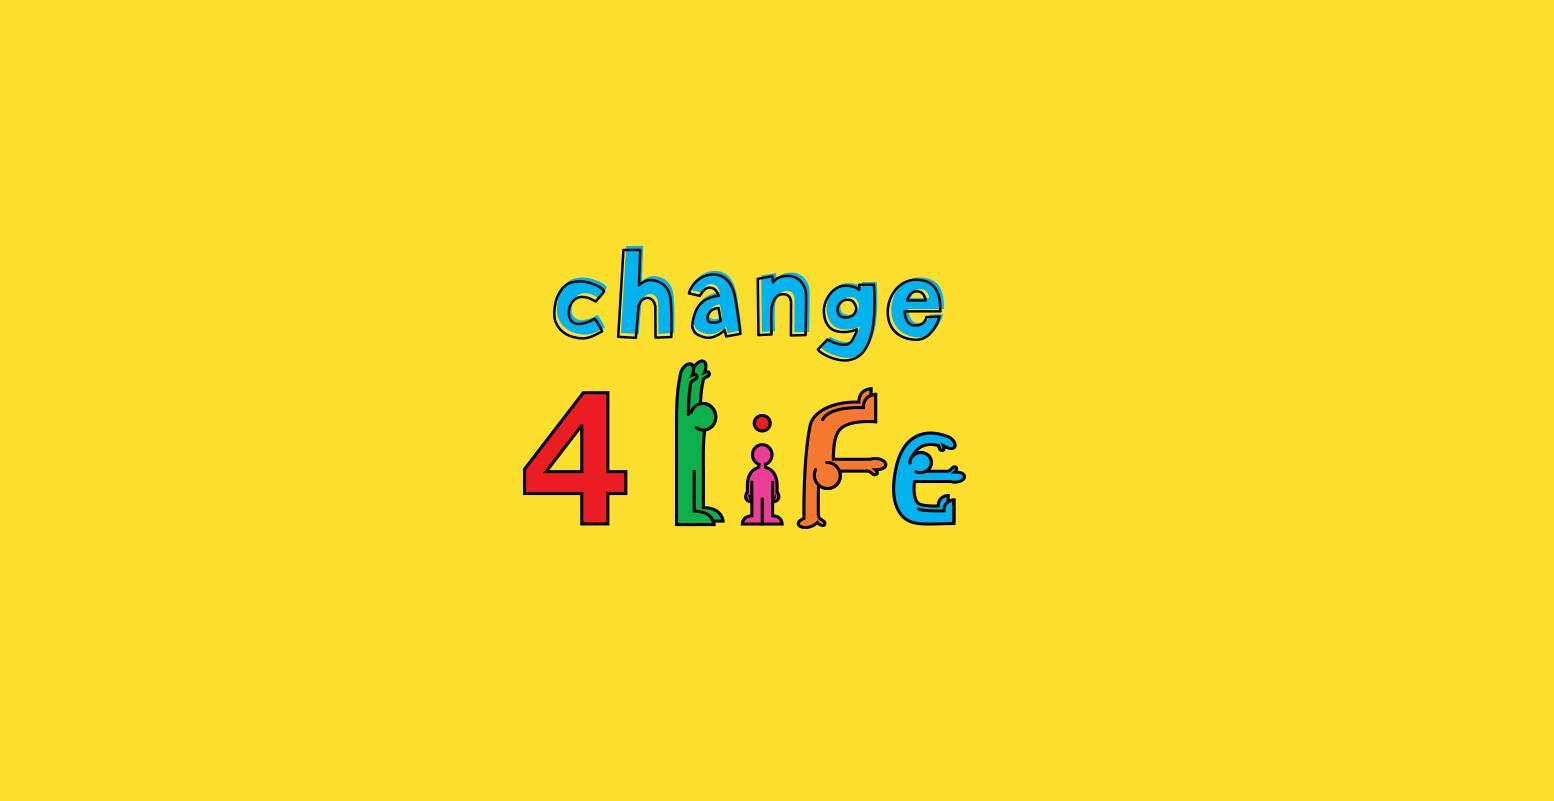 West Change for Life Logo 